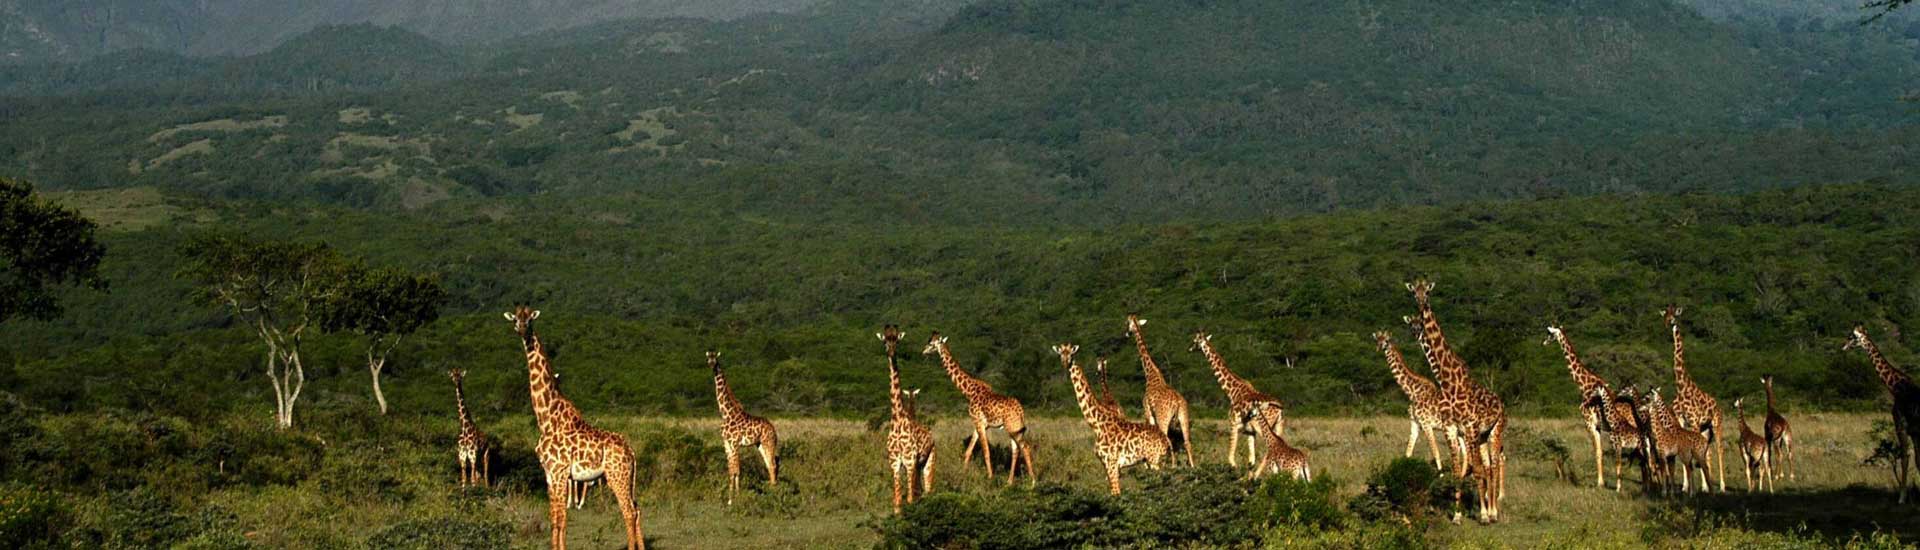 Kimomwe Adventures and Safaris